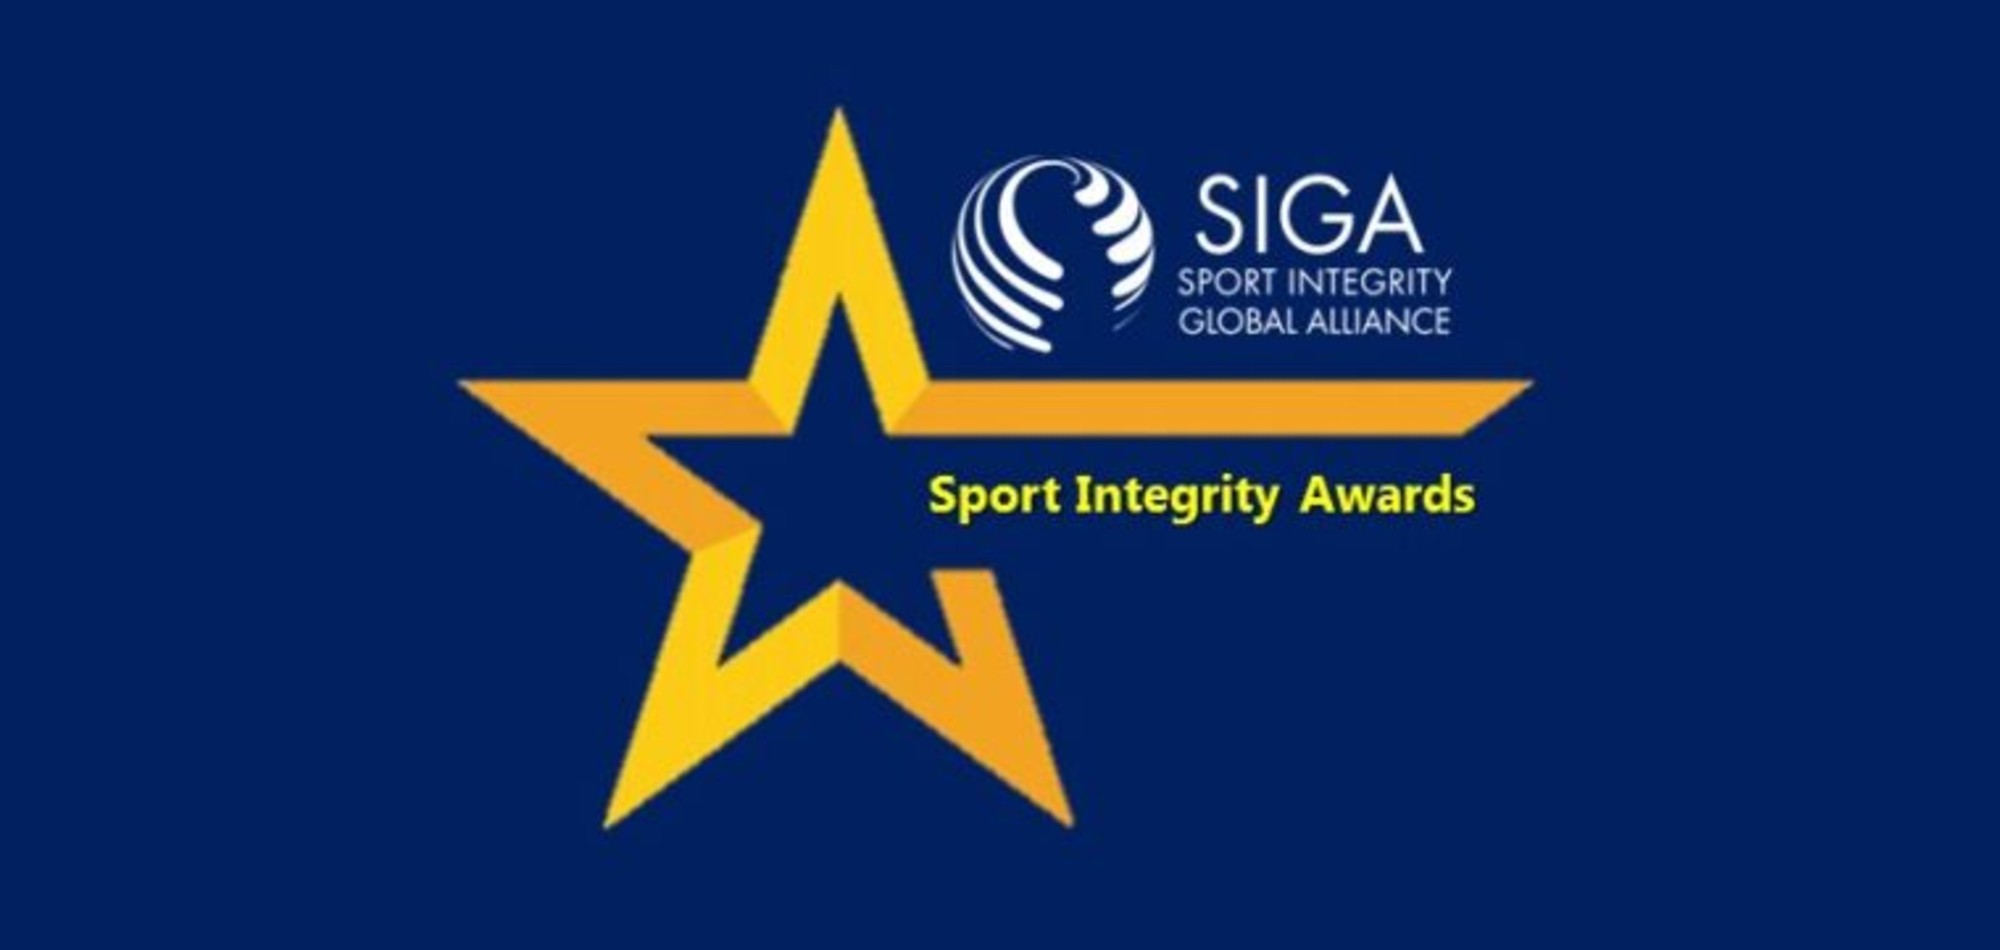 SIGA ANNOUNCES NEW SPORT INTEGRITY AWARDS